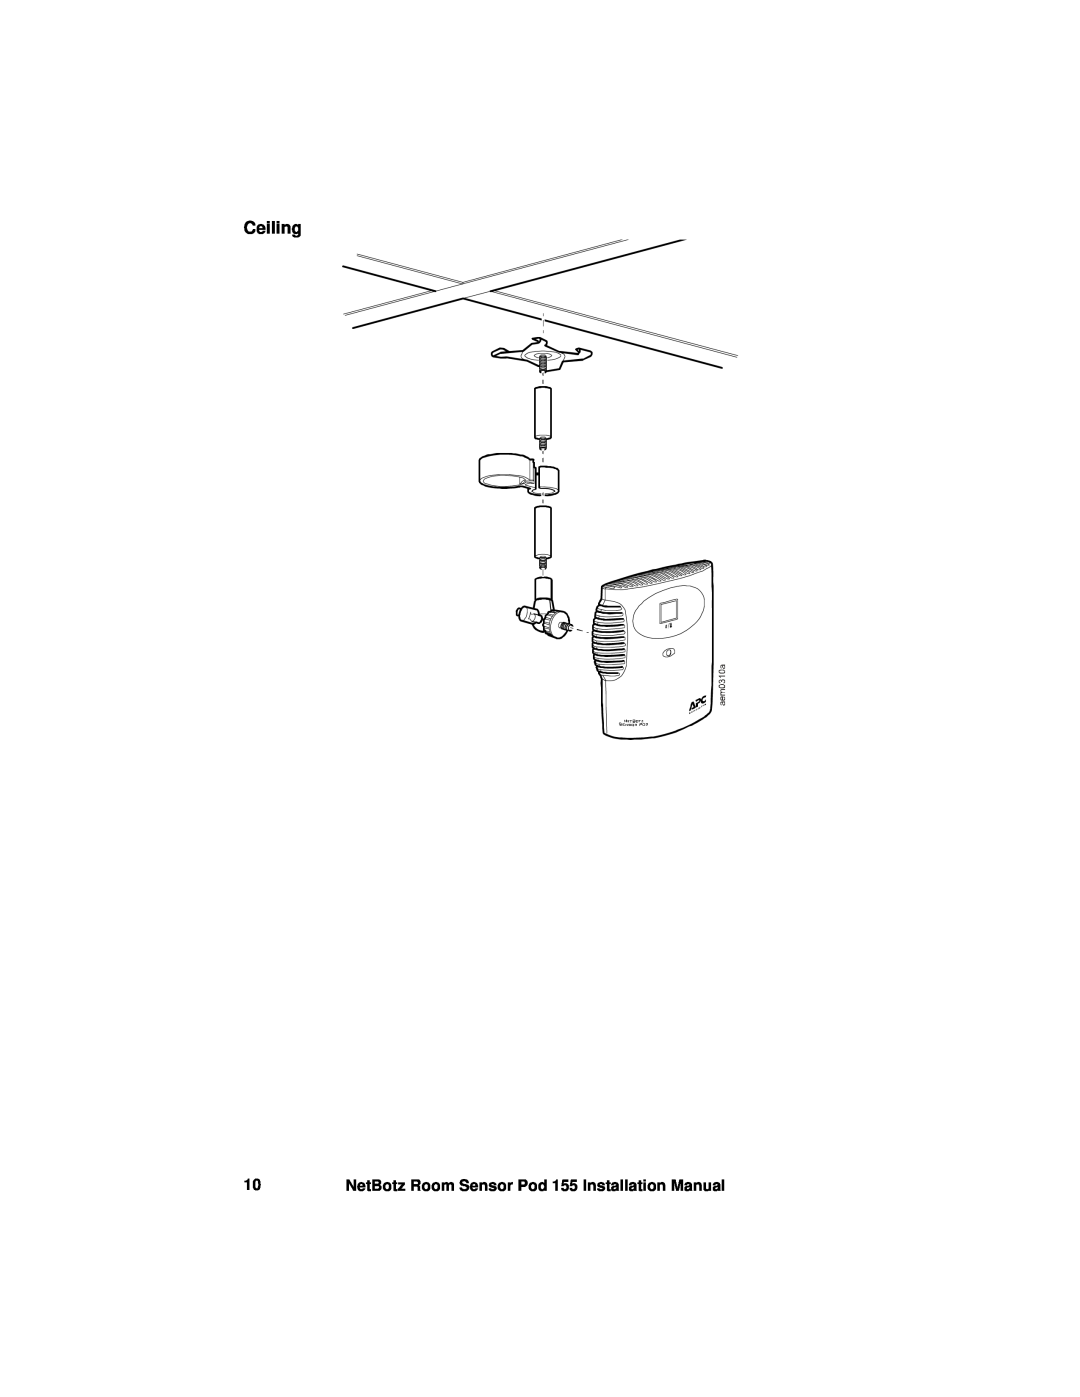 APC NBPD0155 installation manual Ceiling, NetBotz Room Sensor Pod 155 Installation Manual 